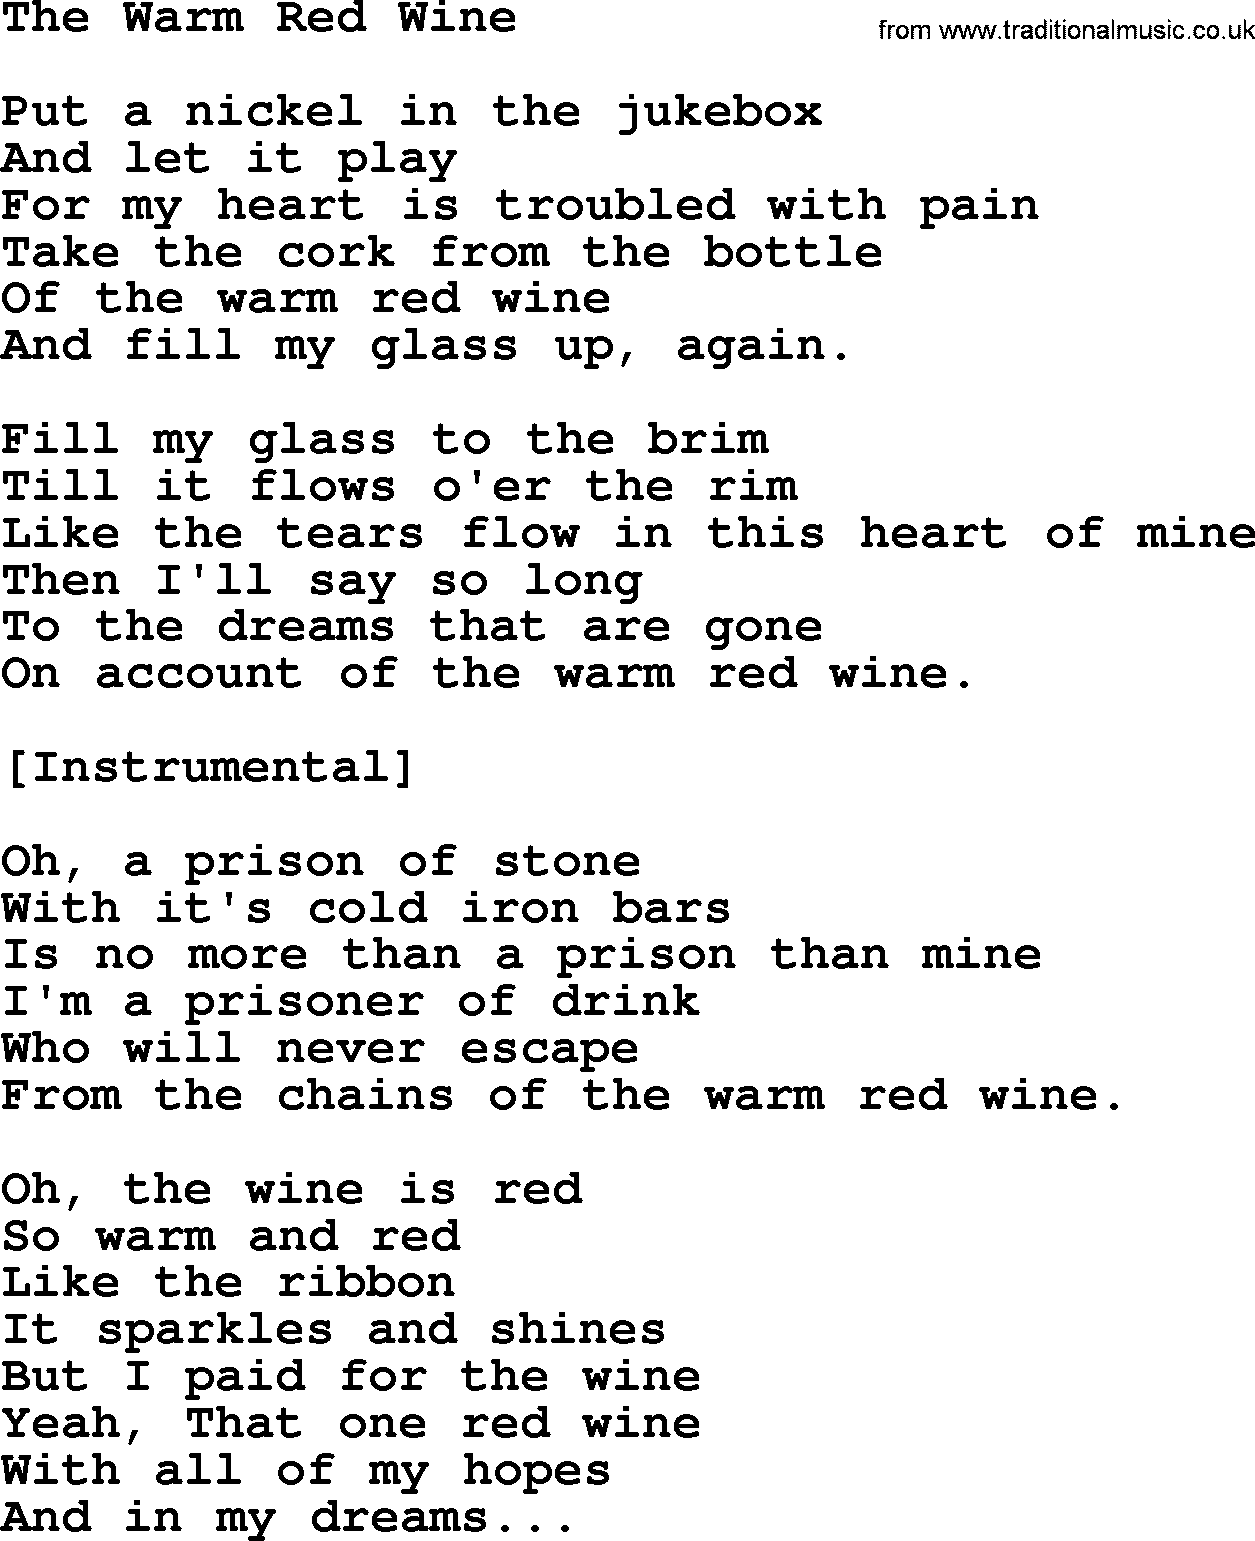 Willie Nelson song: The Warm Red Wine lyrics